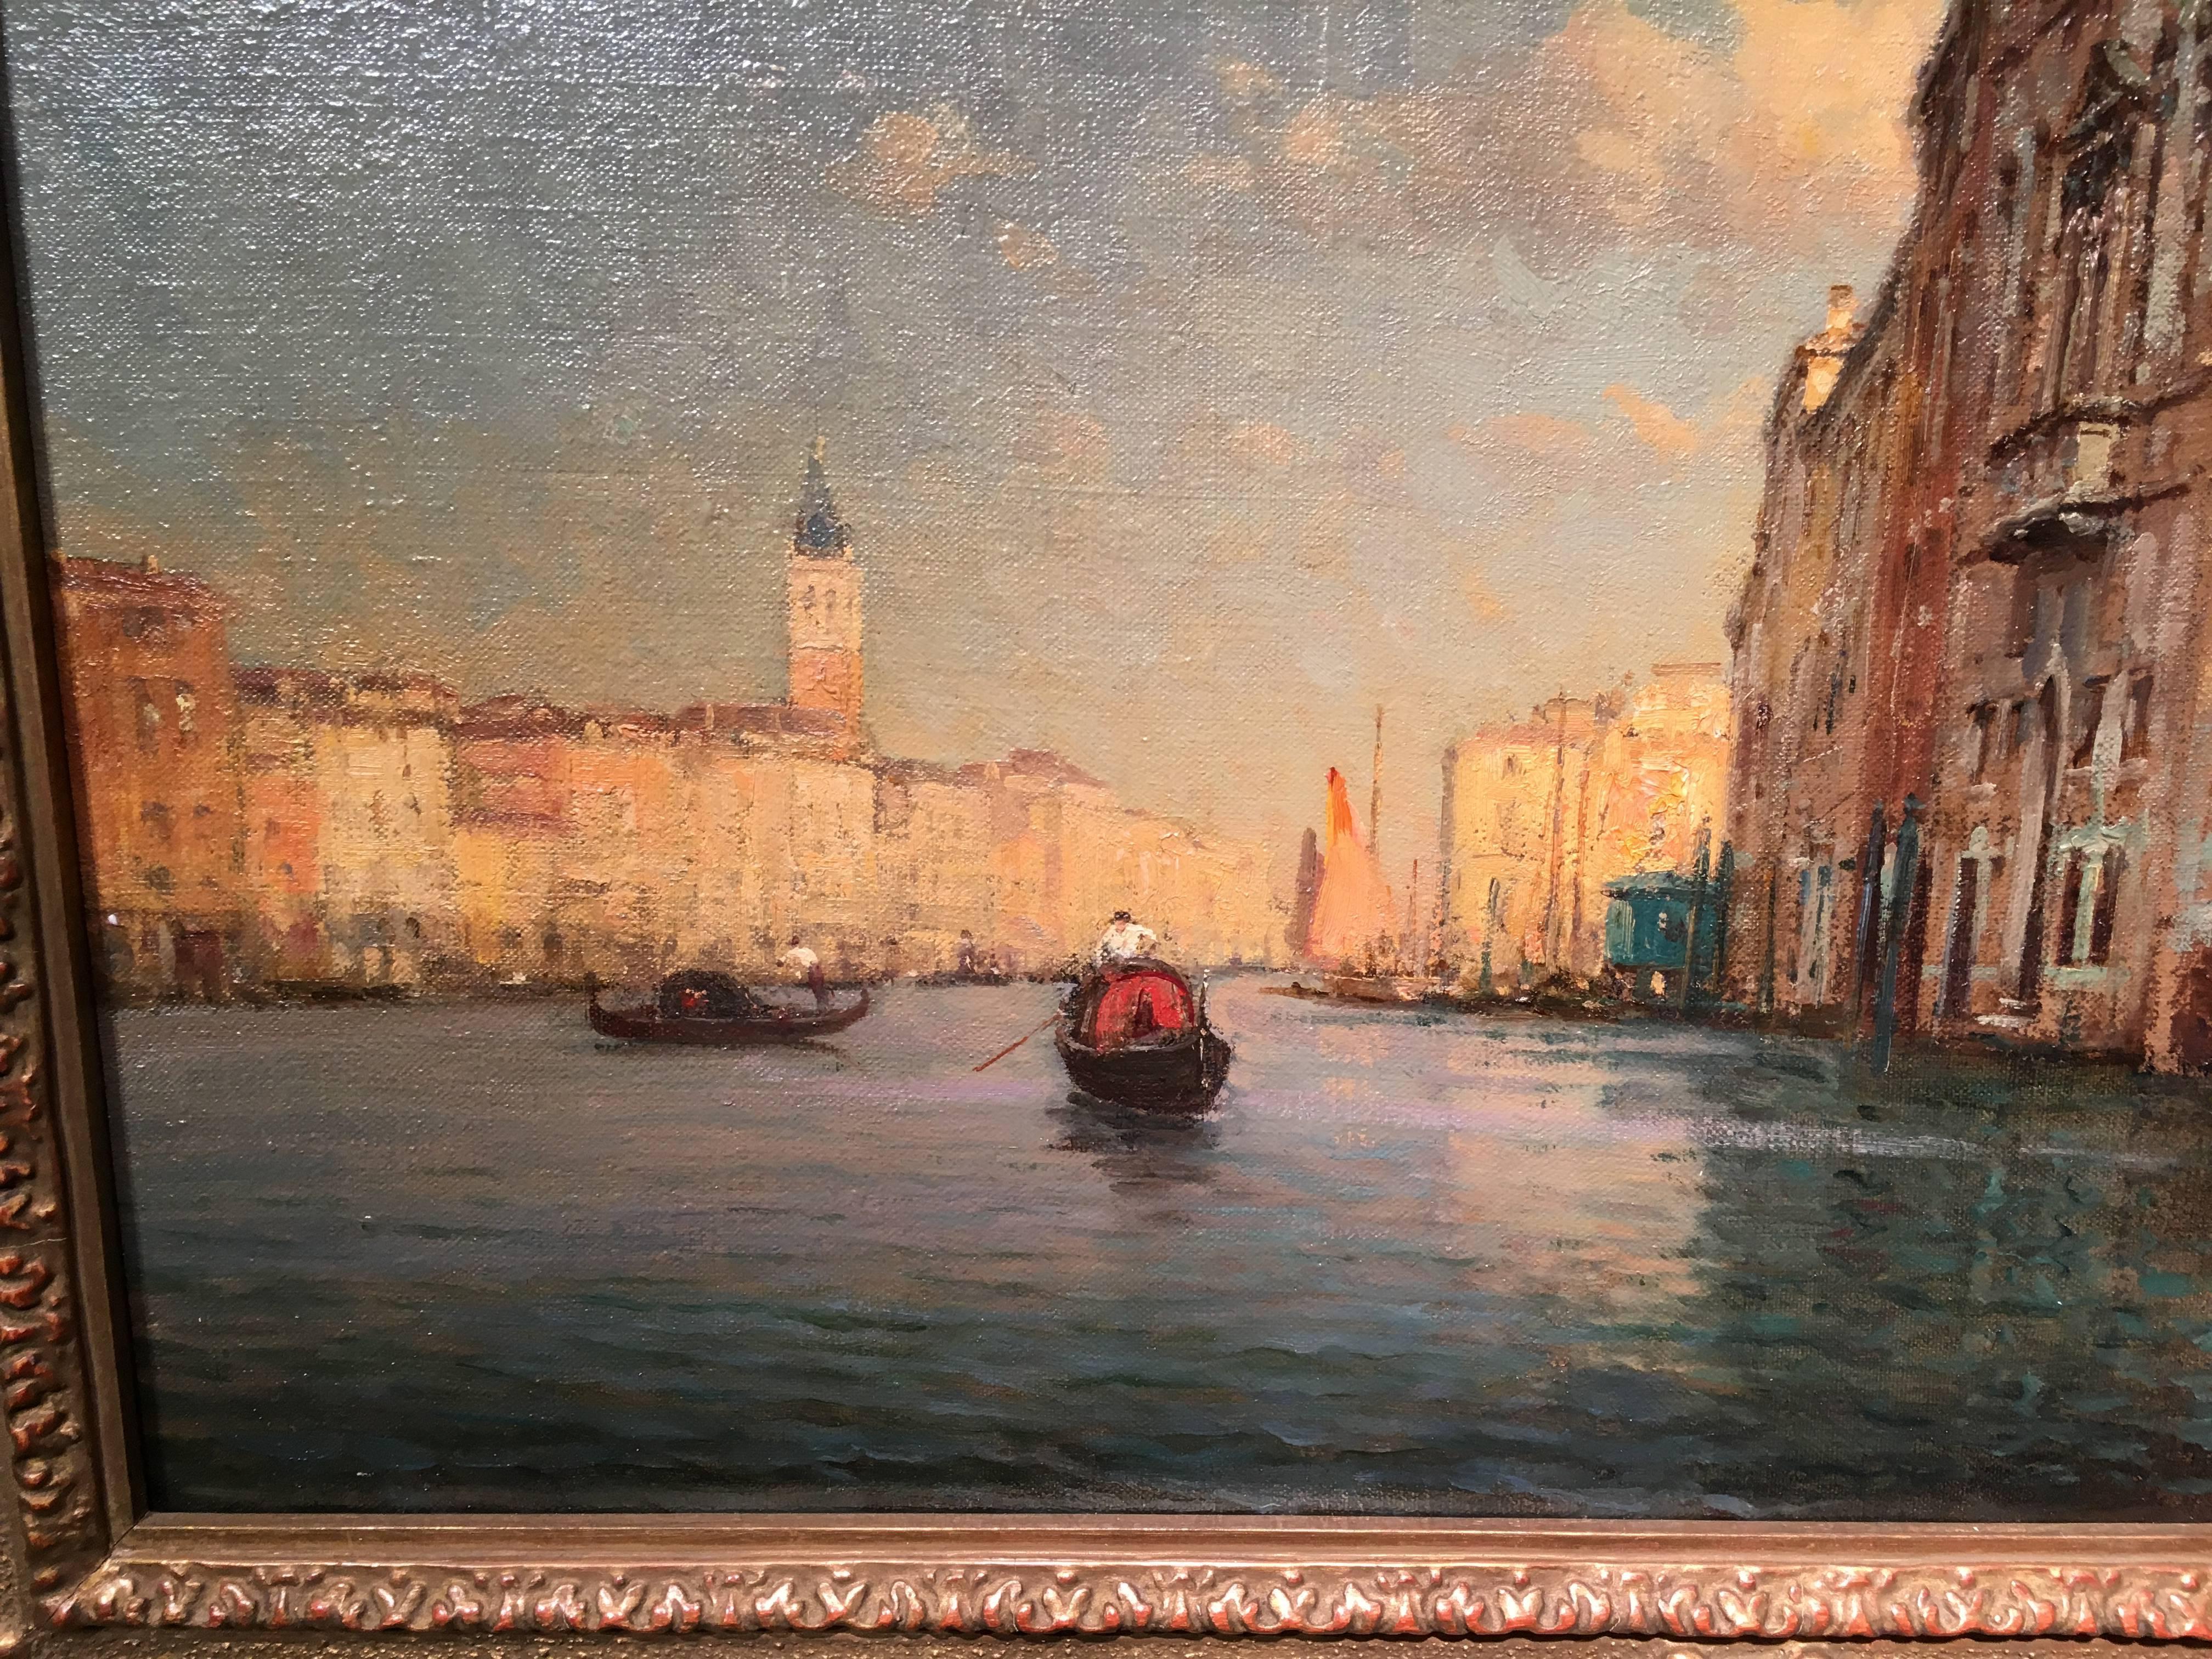 Setting Sun along a canal, Venice, Italy - Impressionist Painting by Antoine Bouvard (Marc Aldine)